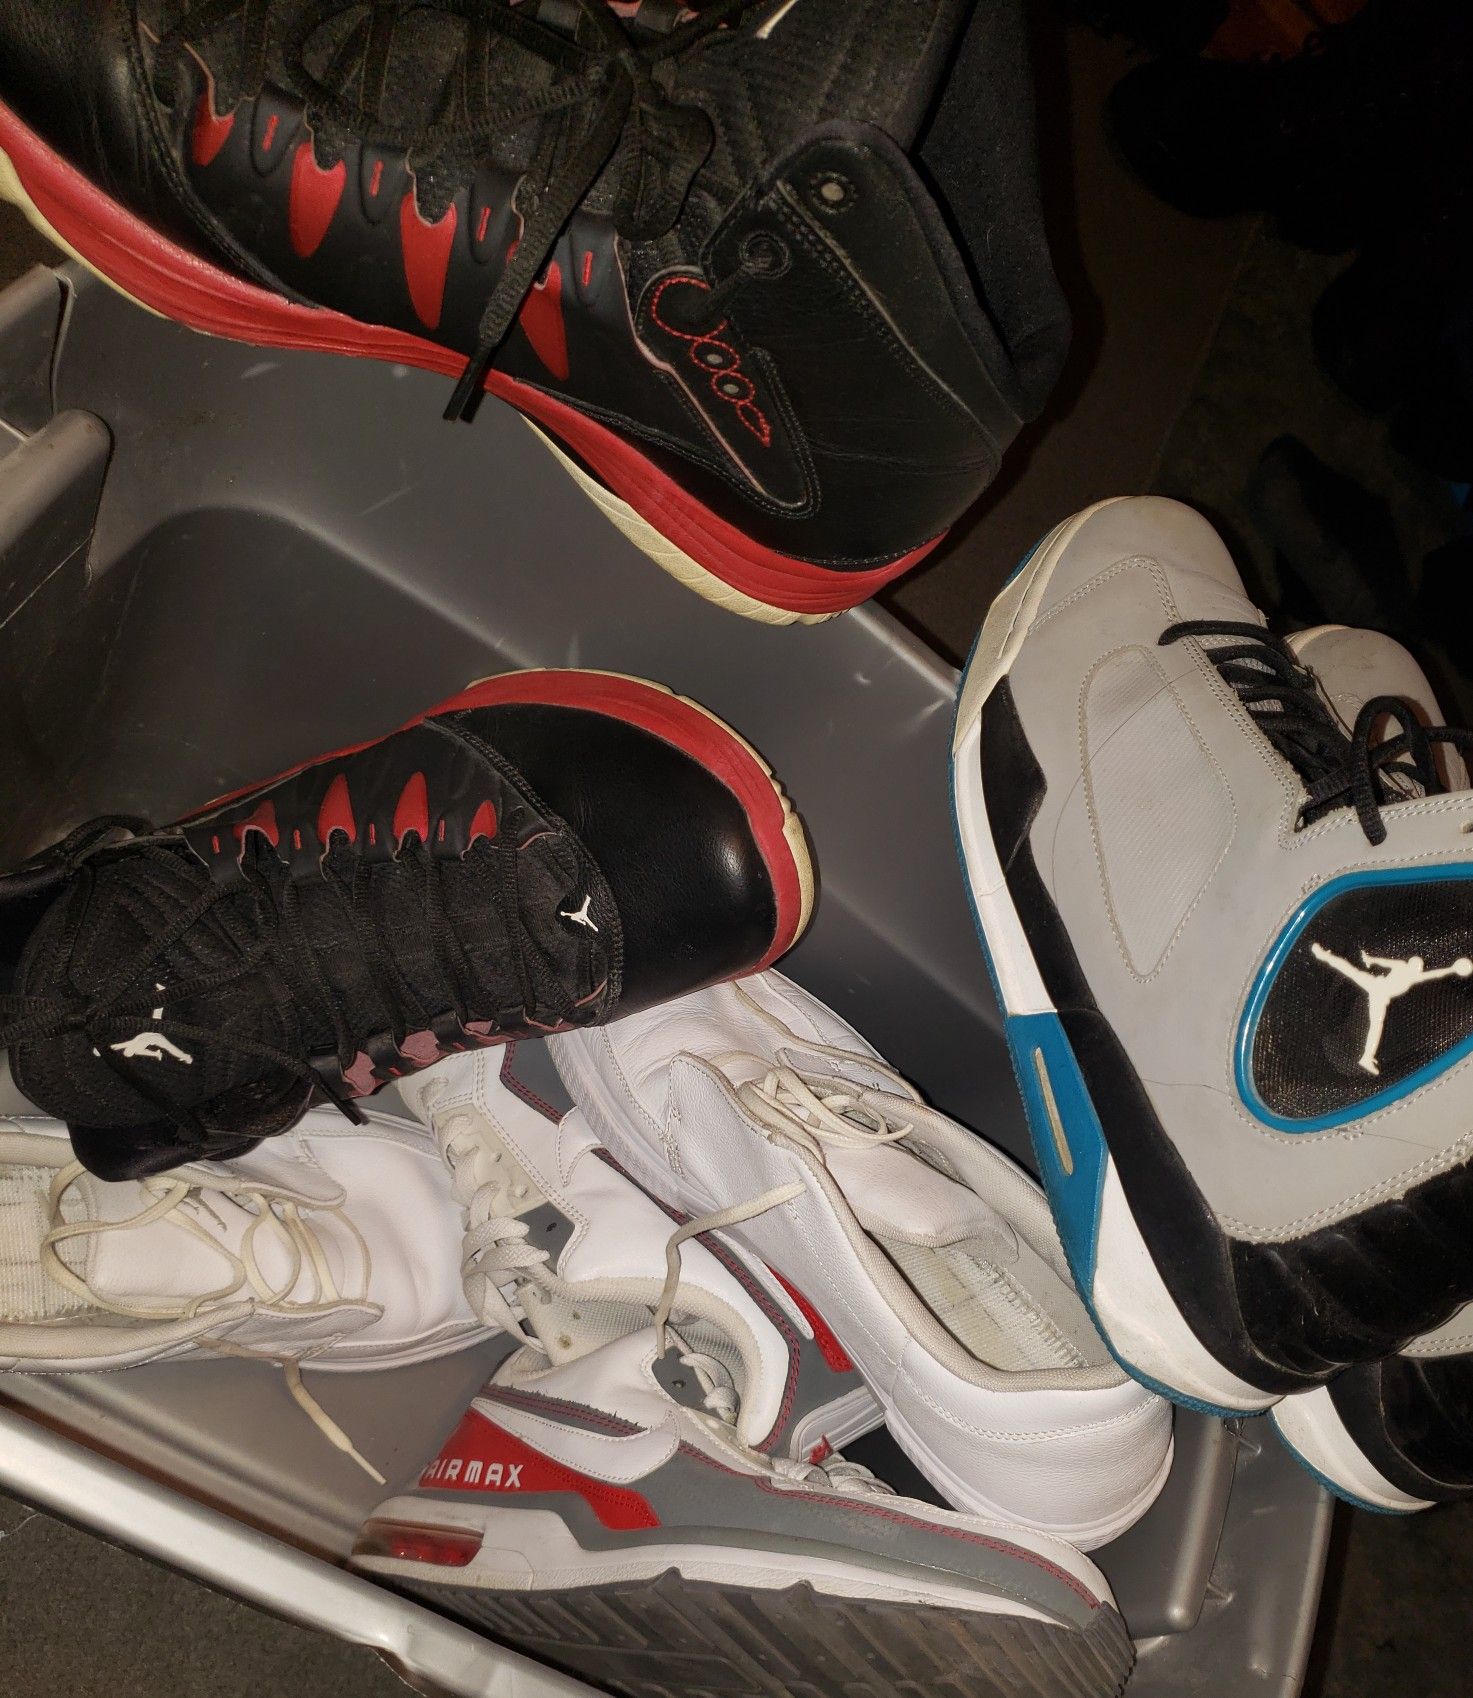 Box of Jordans and Nike